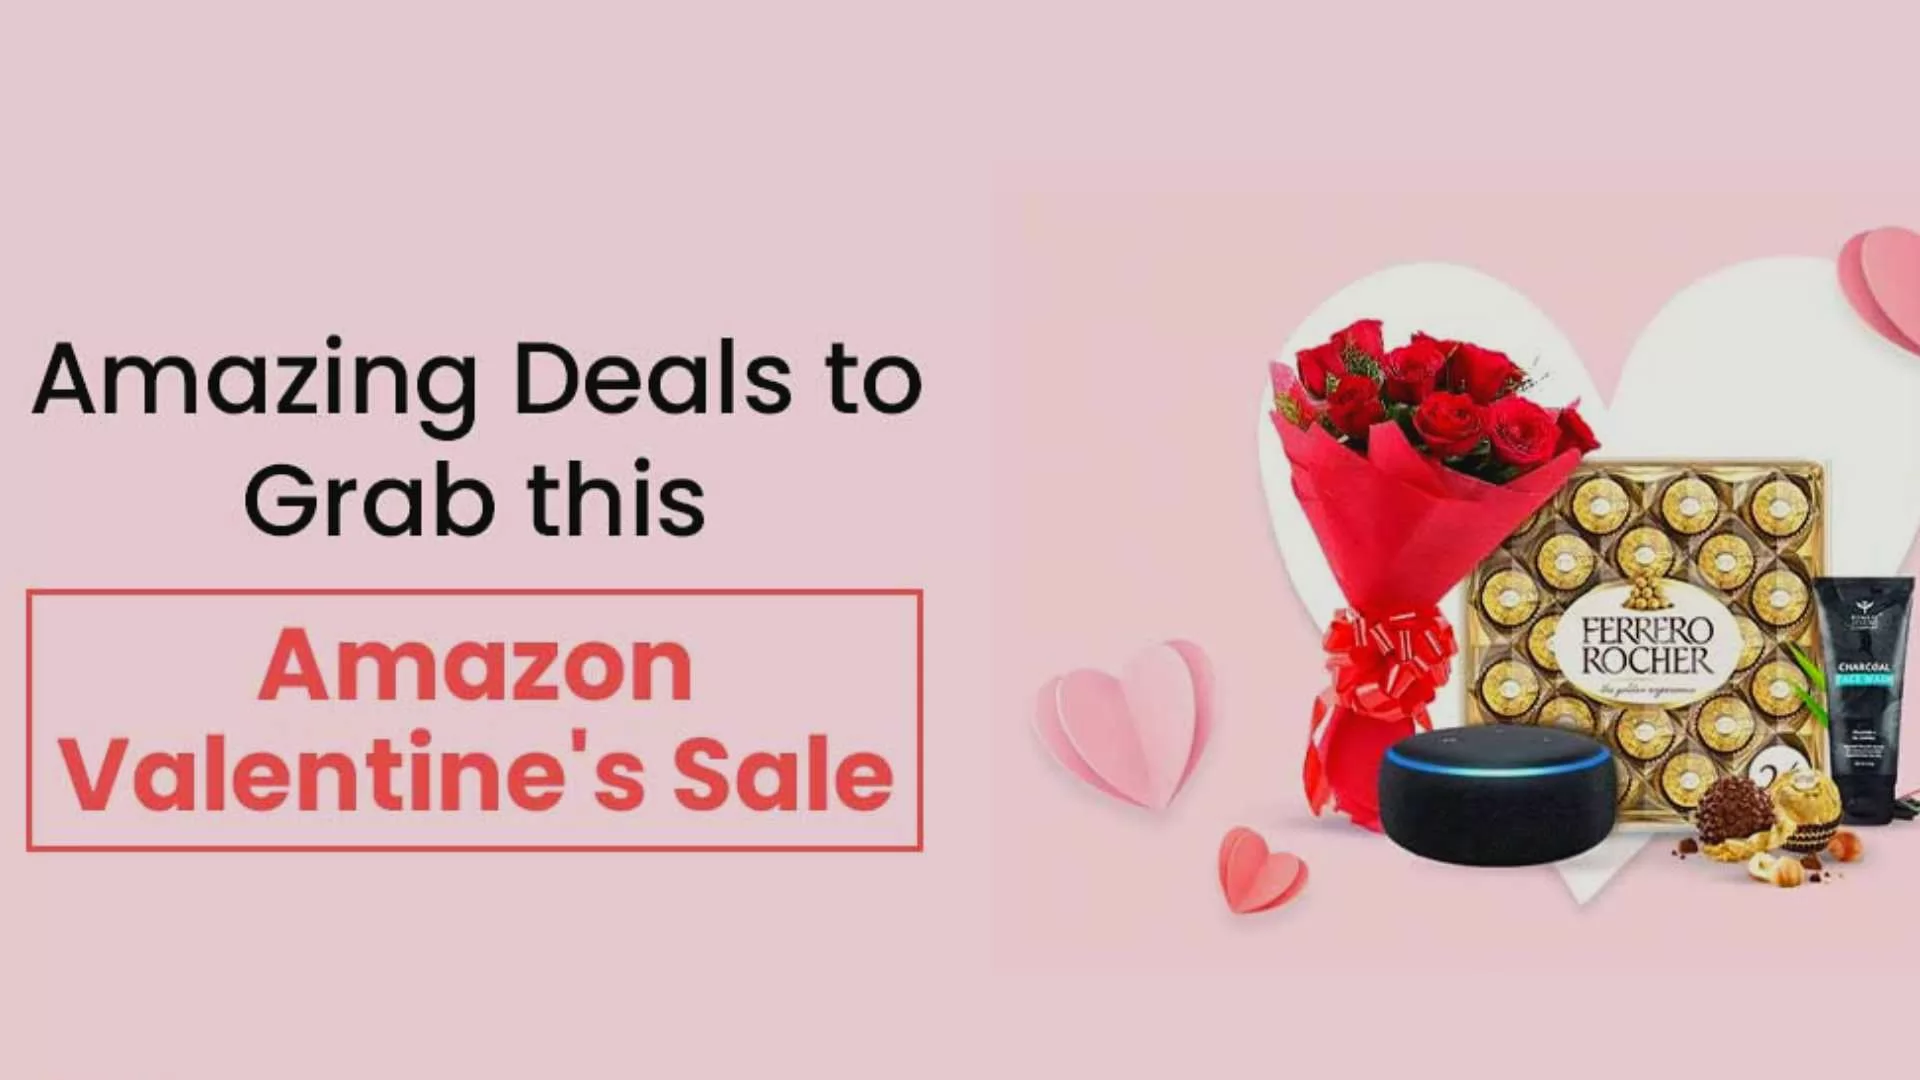 Amazon Valentine’s Day Sale